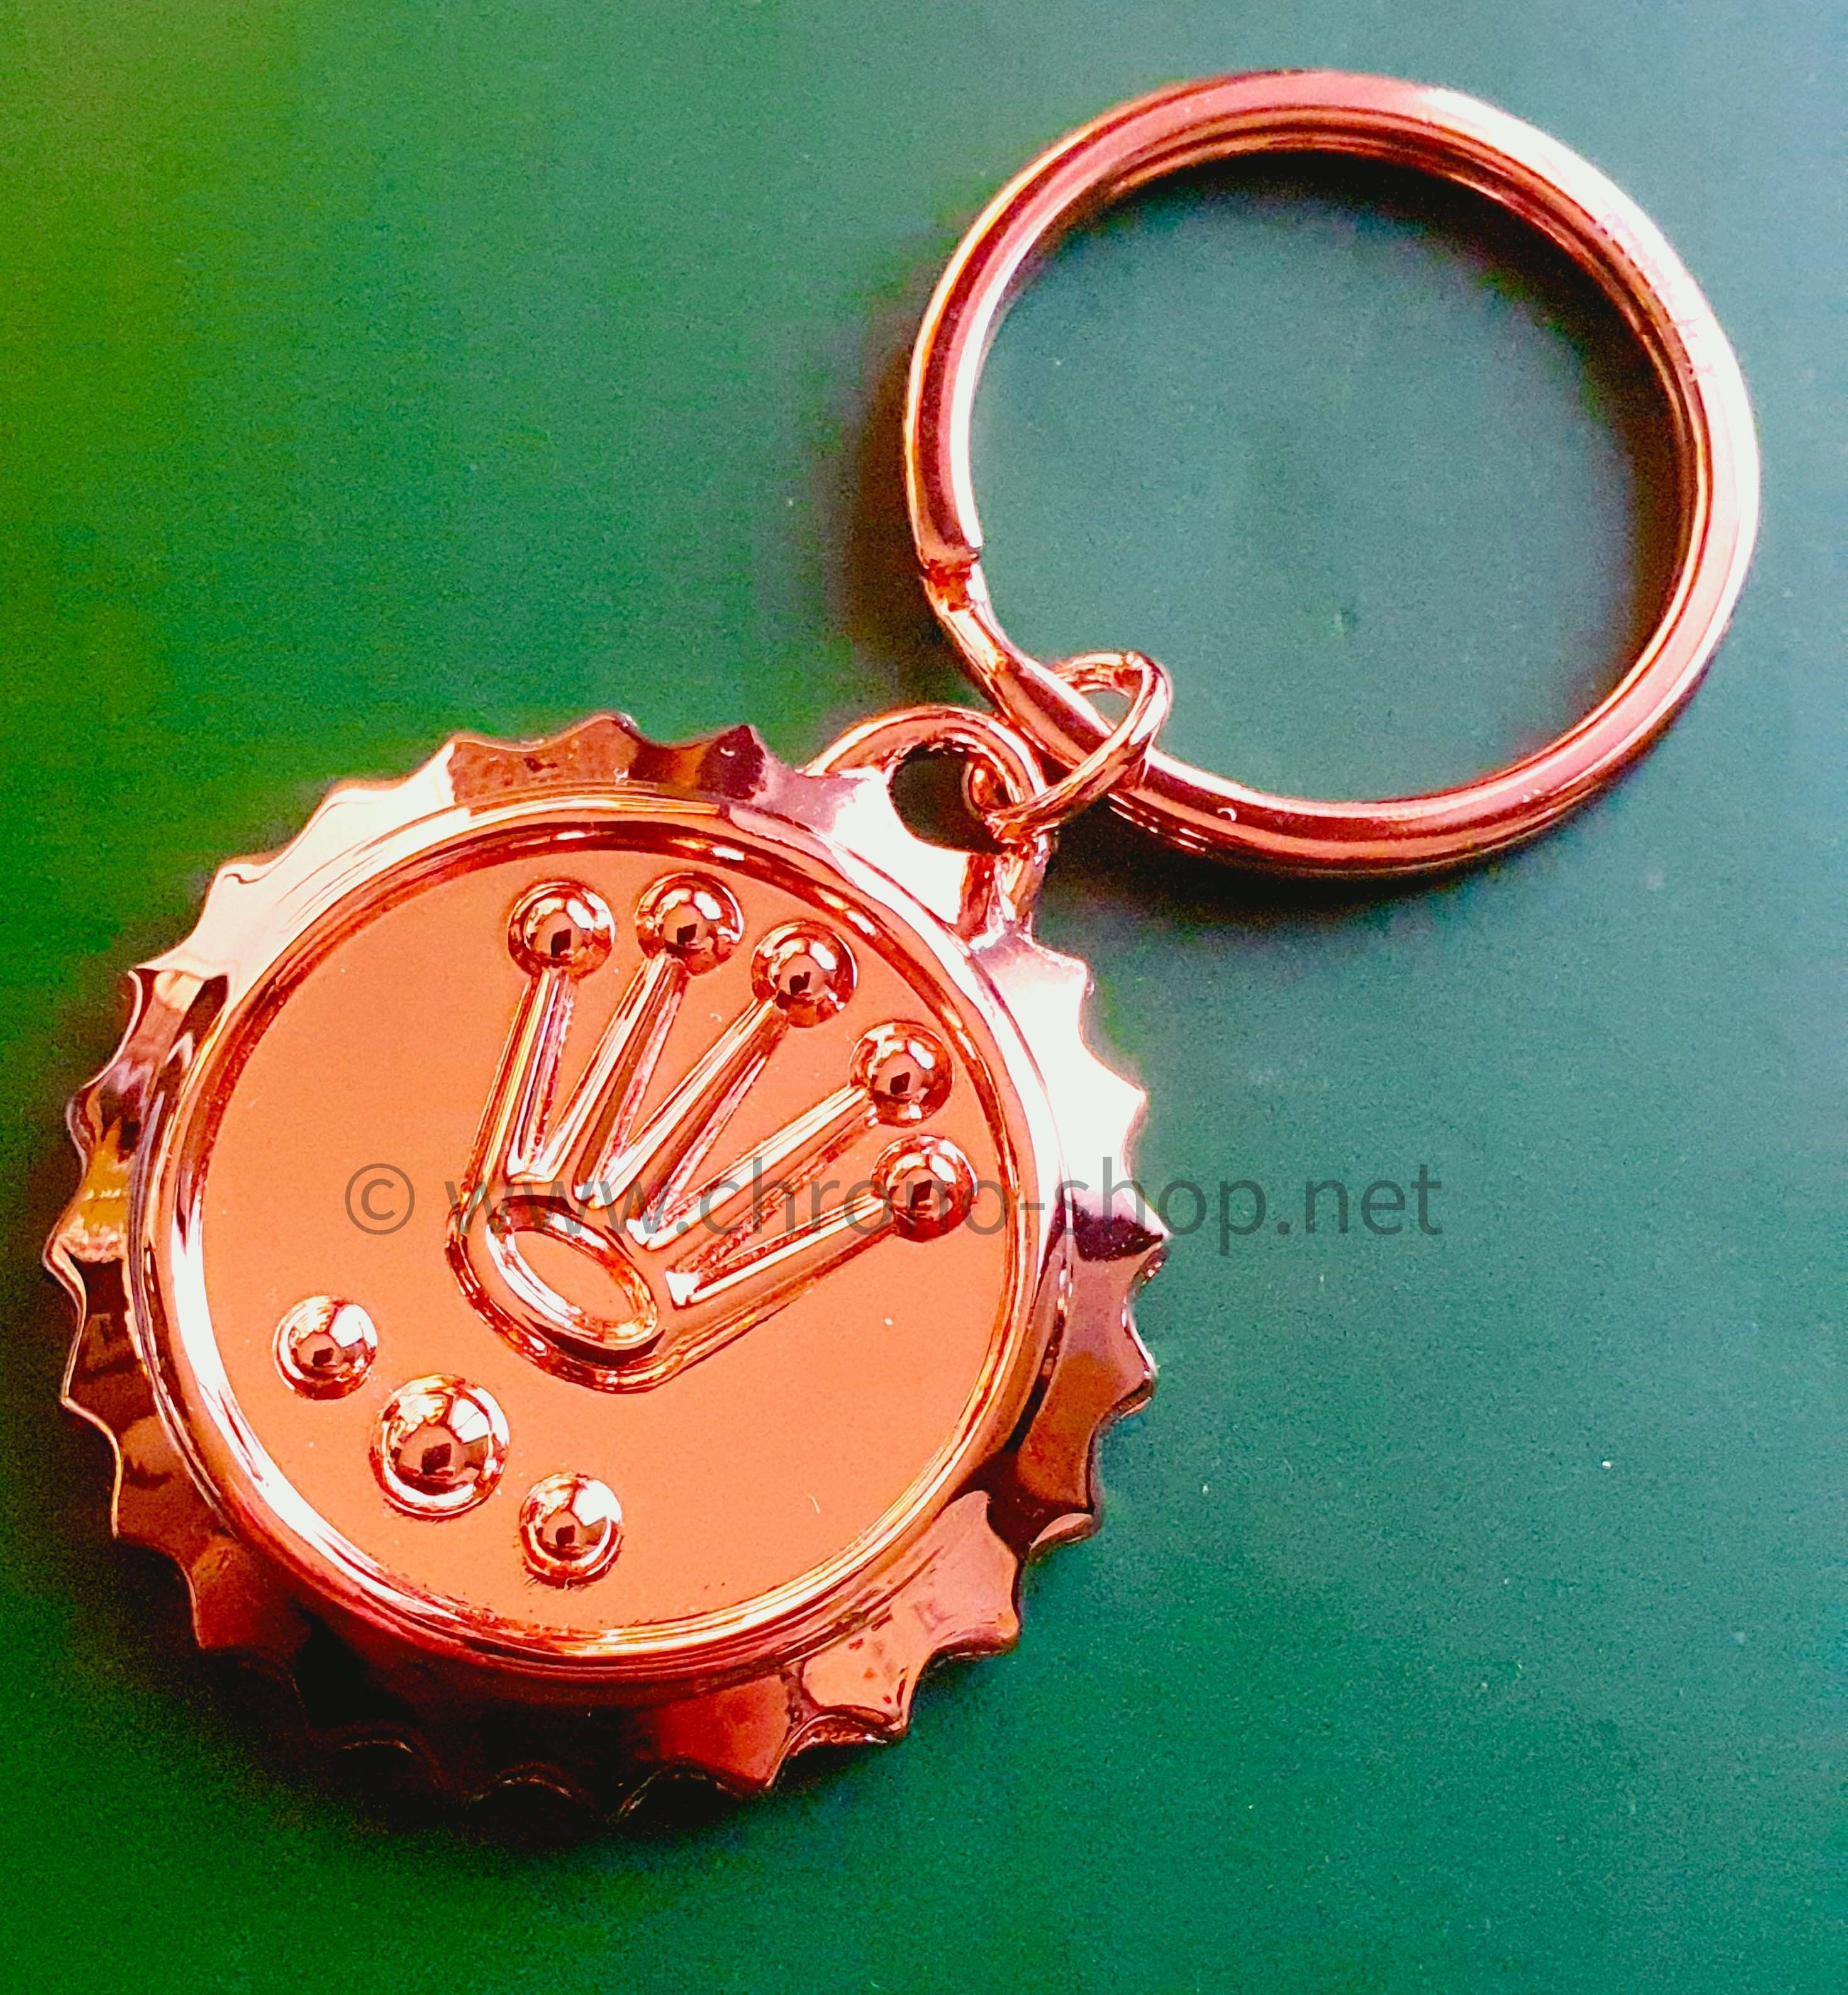 Rolex Collectible Everose Style Triplock Coronet Submariner crown ssteel  key ring, keychain,holder baselworld watch goodies